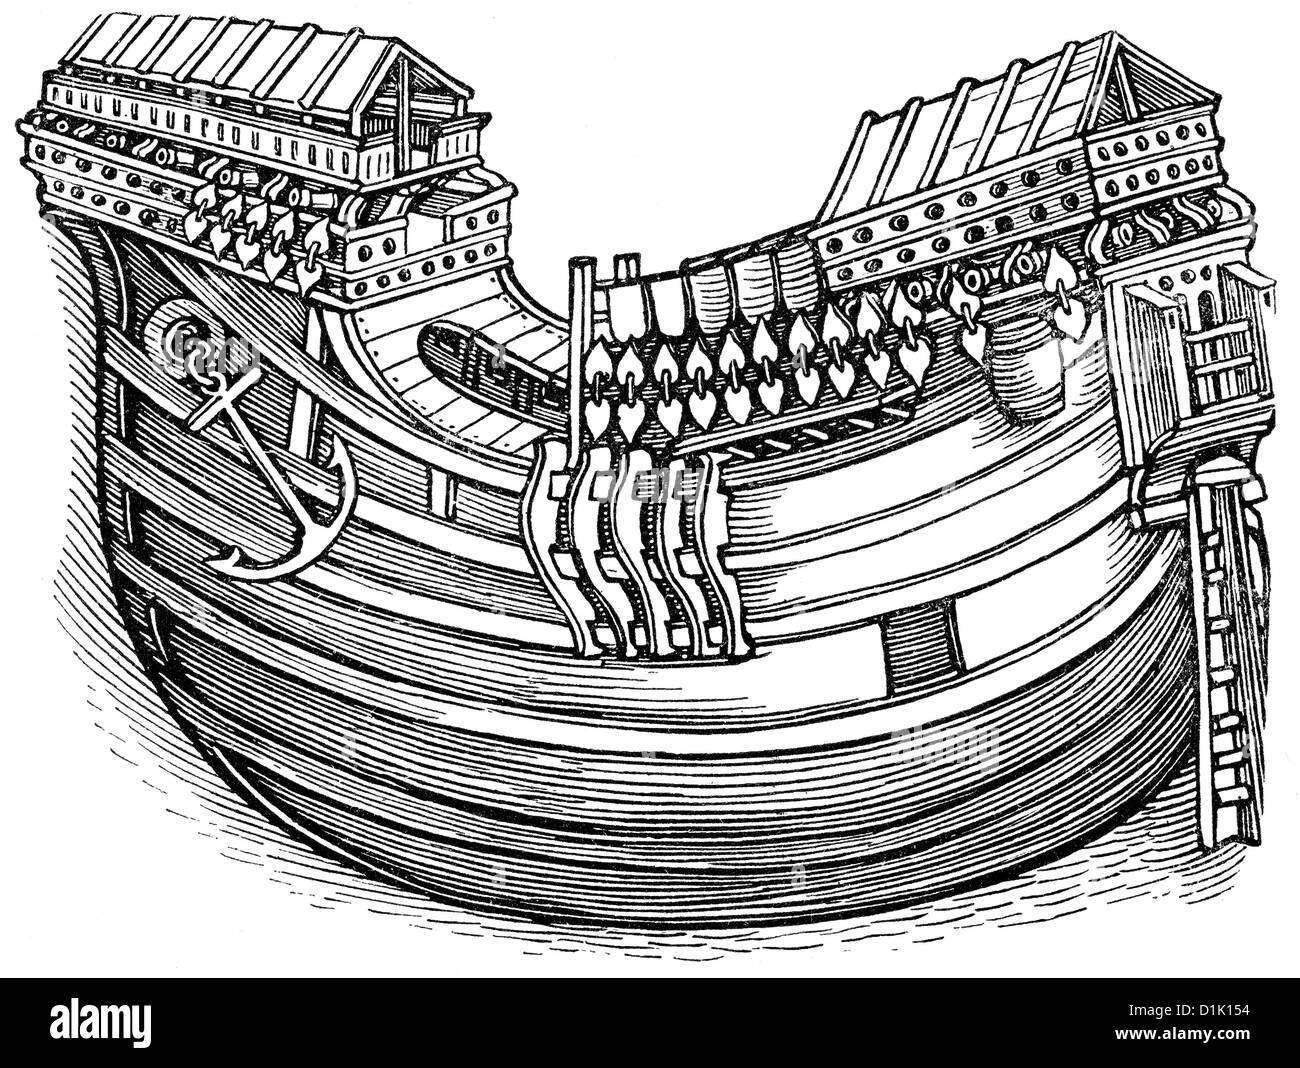 Dimensions historiques de la coque d'un navire, navire d'un Indien de l'explorer, un navire de la Dutch East India Company, 16ème siècle, Banque D'Images